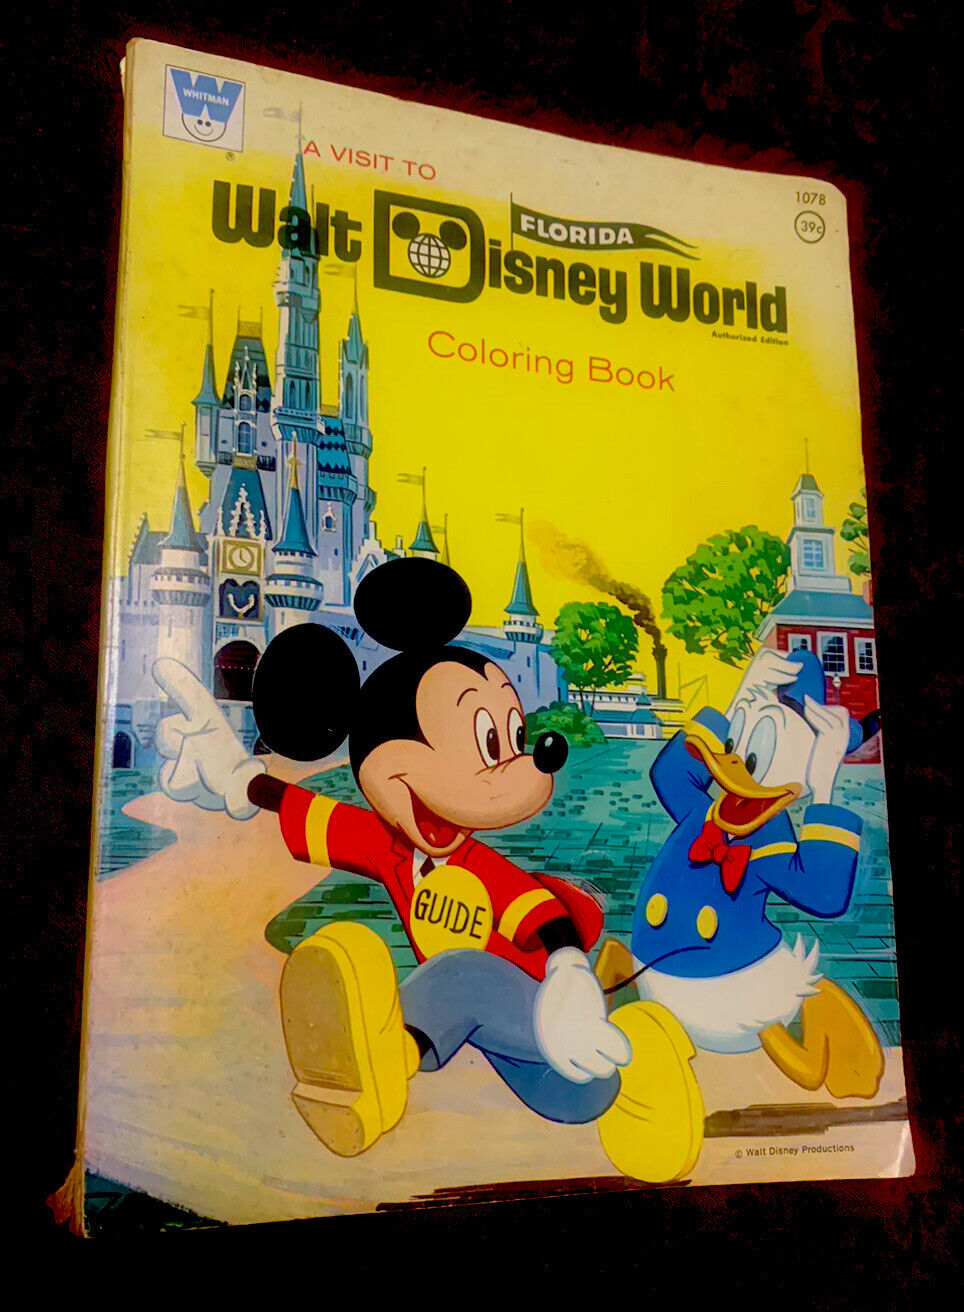 Vintage 1972 “A Visit To Walt Disney World Florida” Coloring Book Whitman #1078